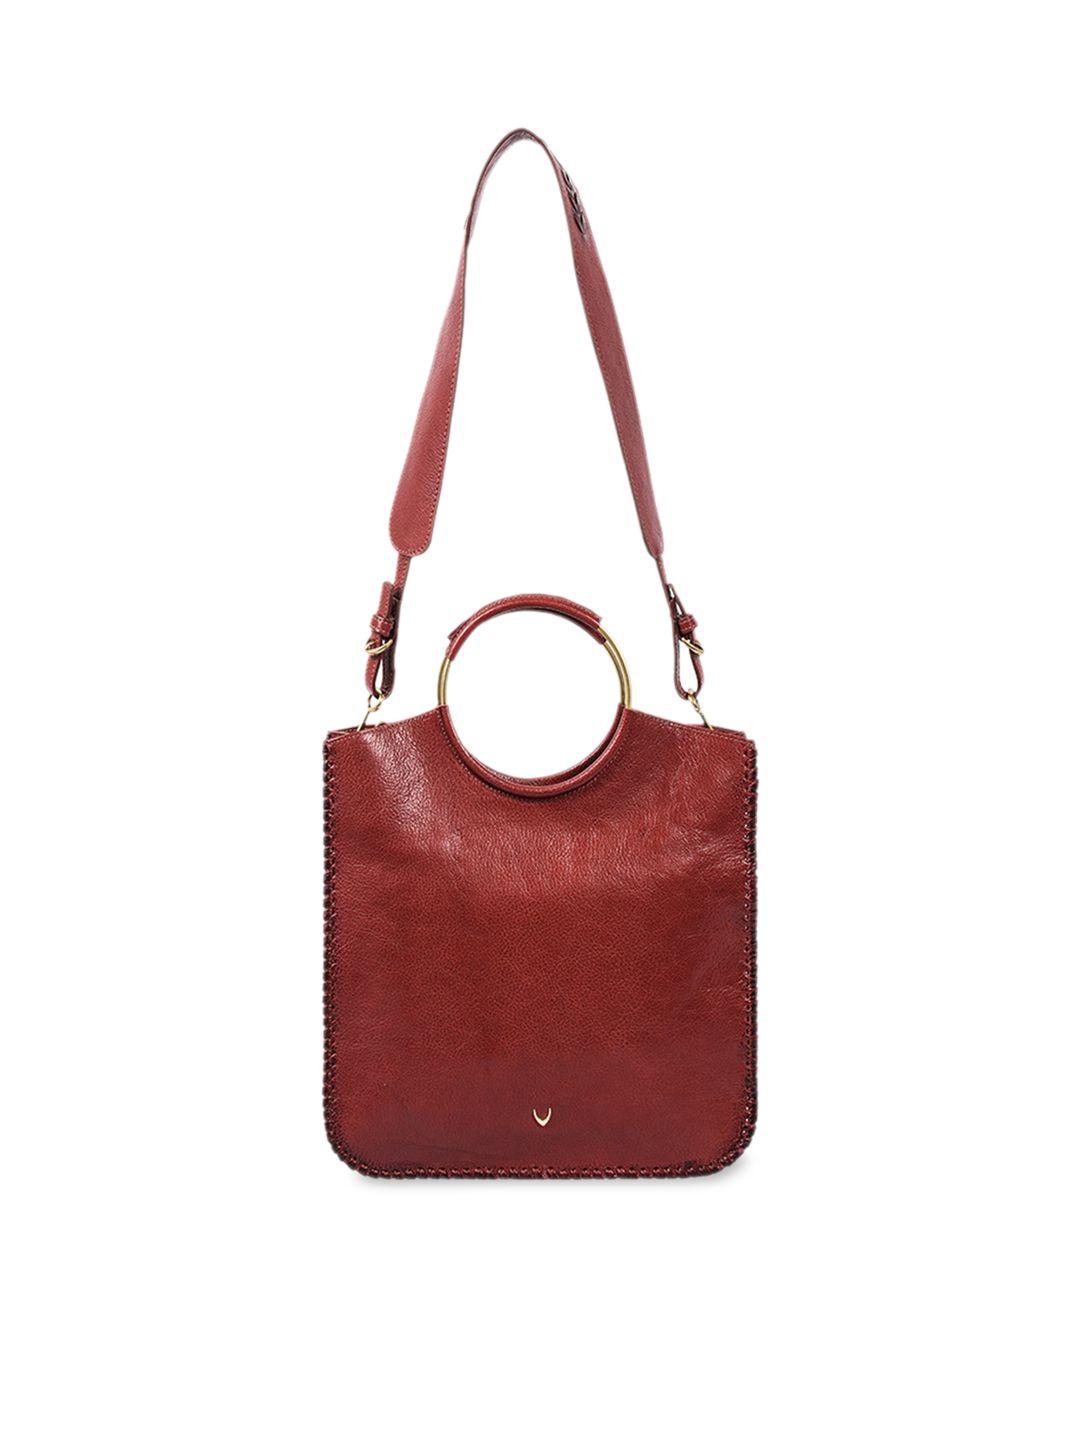 hidesign red solid leather handheld bag